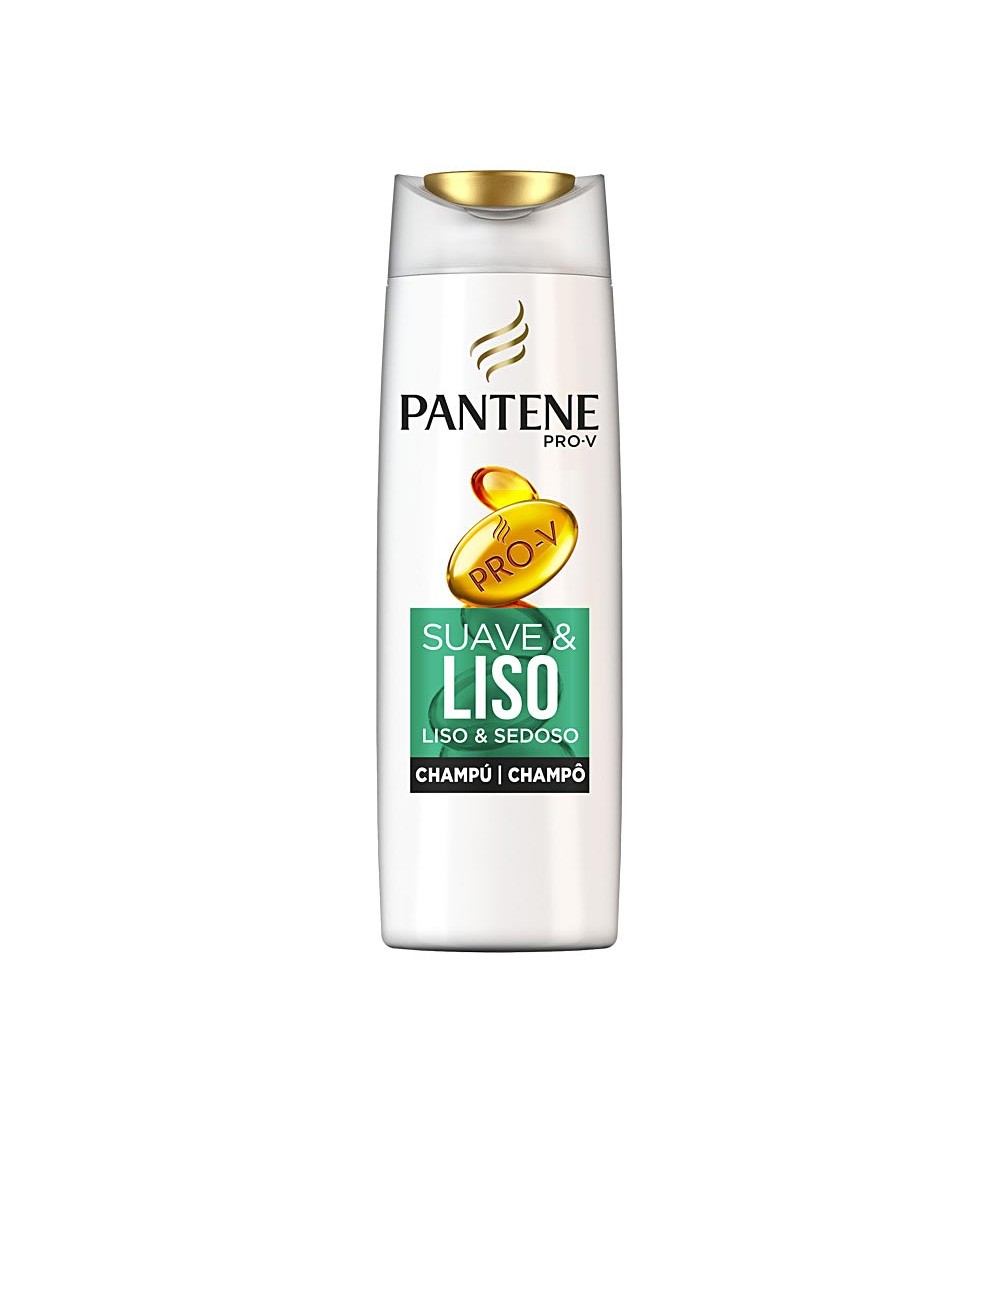 shampooing DOUX ET LISSE  360 ml